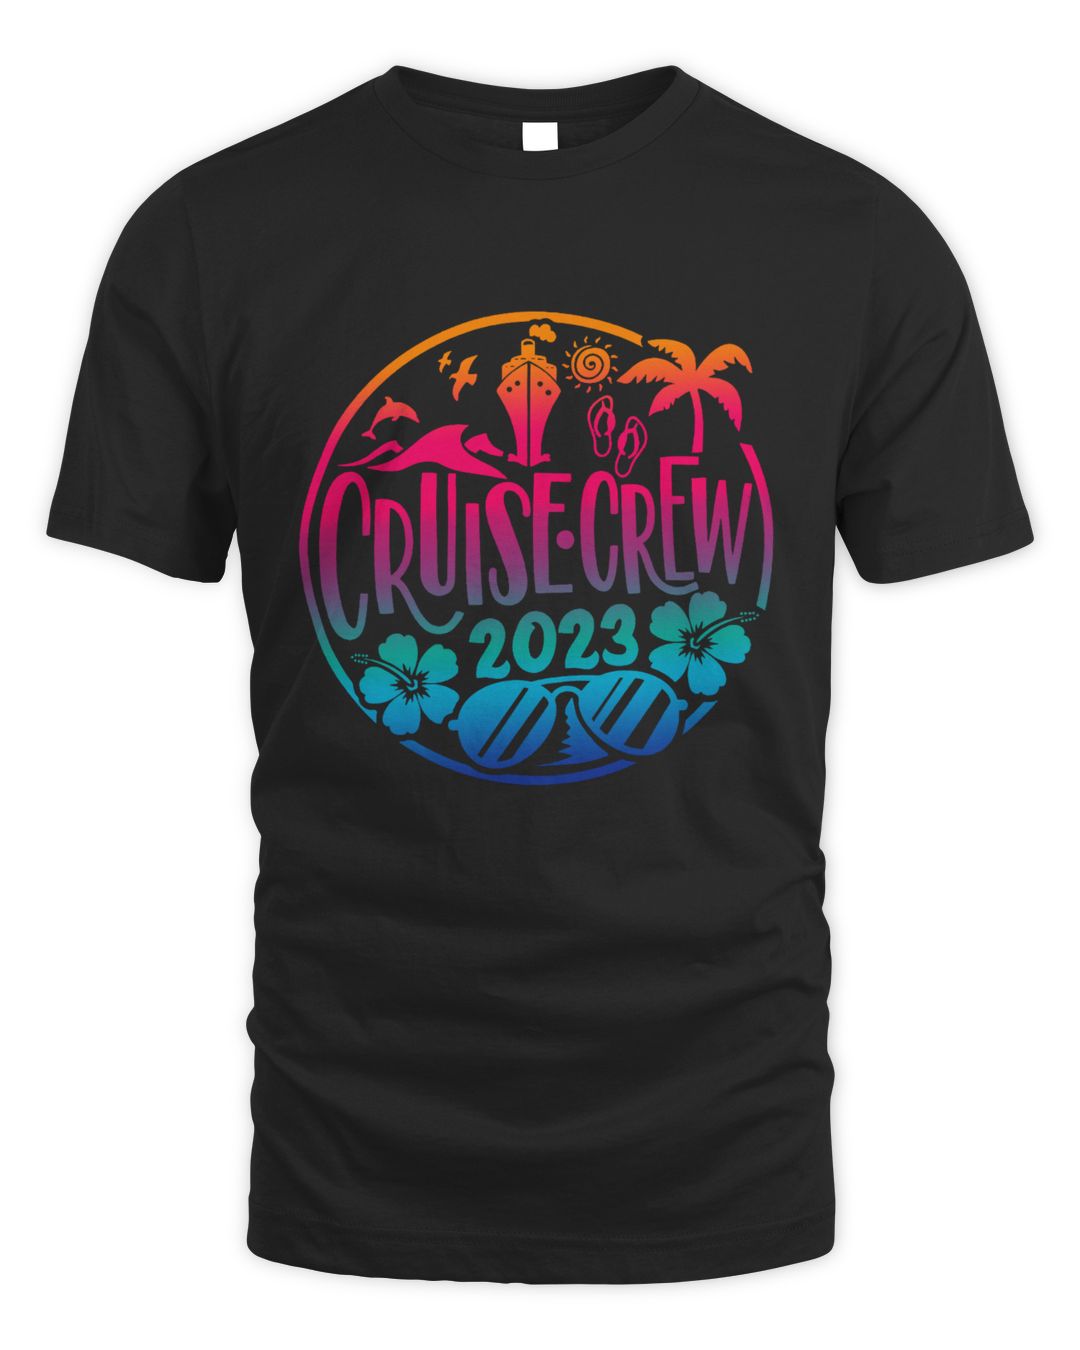 Cruise.Crew 2023 | Hugestee